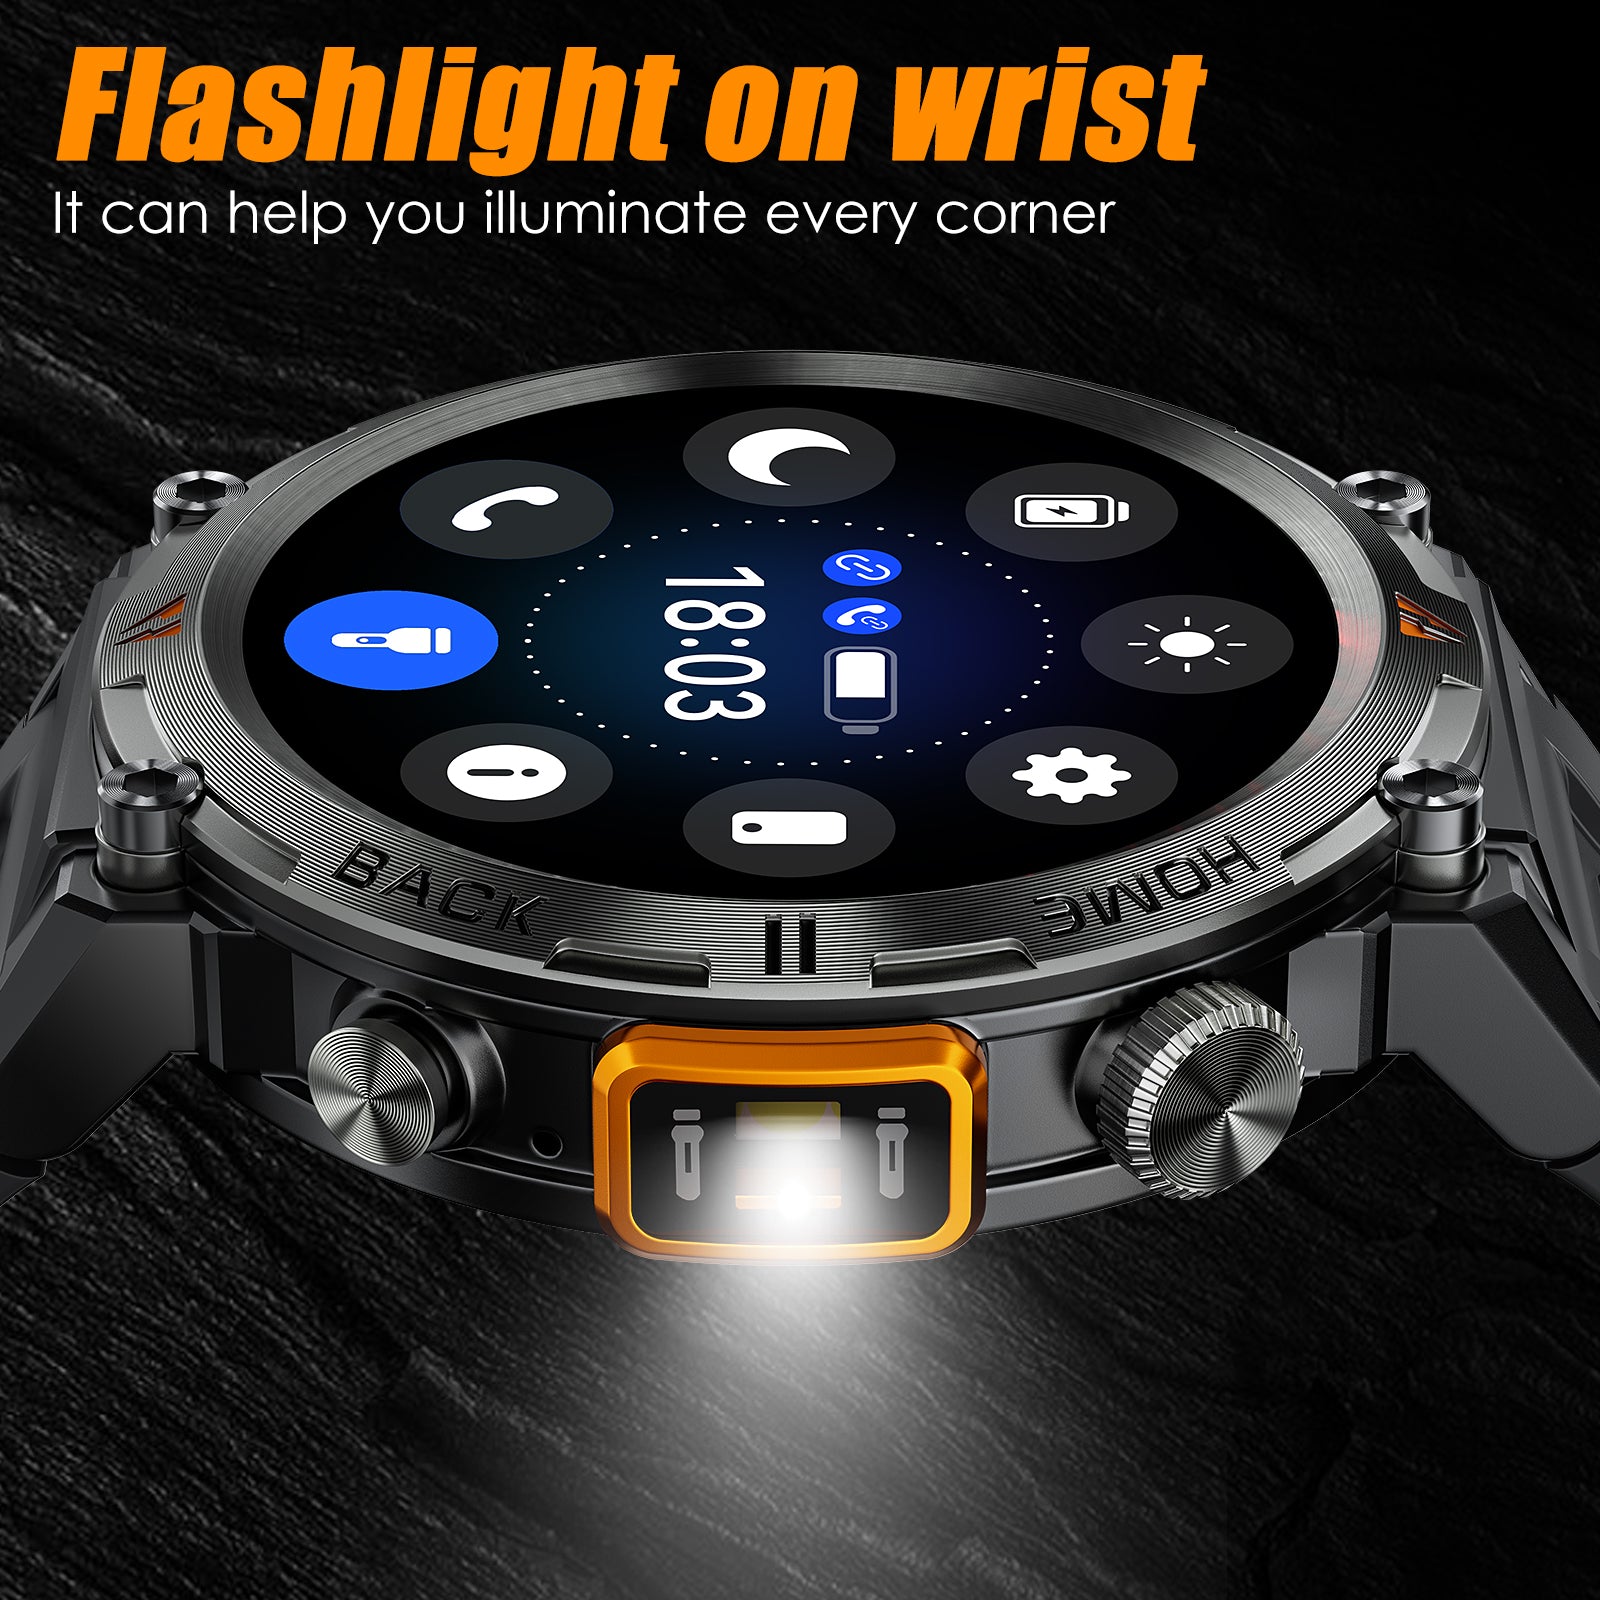 Smartwatch indestructible KE3 Eigiis (Link en mi bio) @Shoptemu_MX N, smart watch